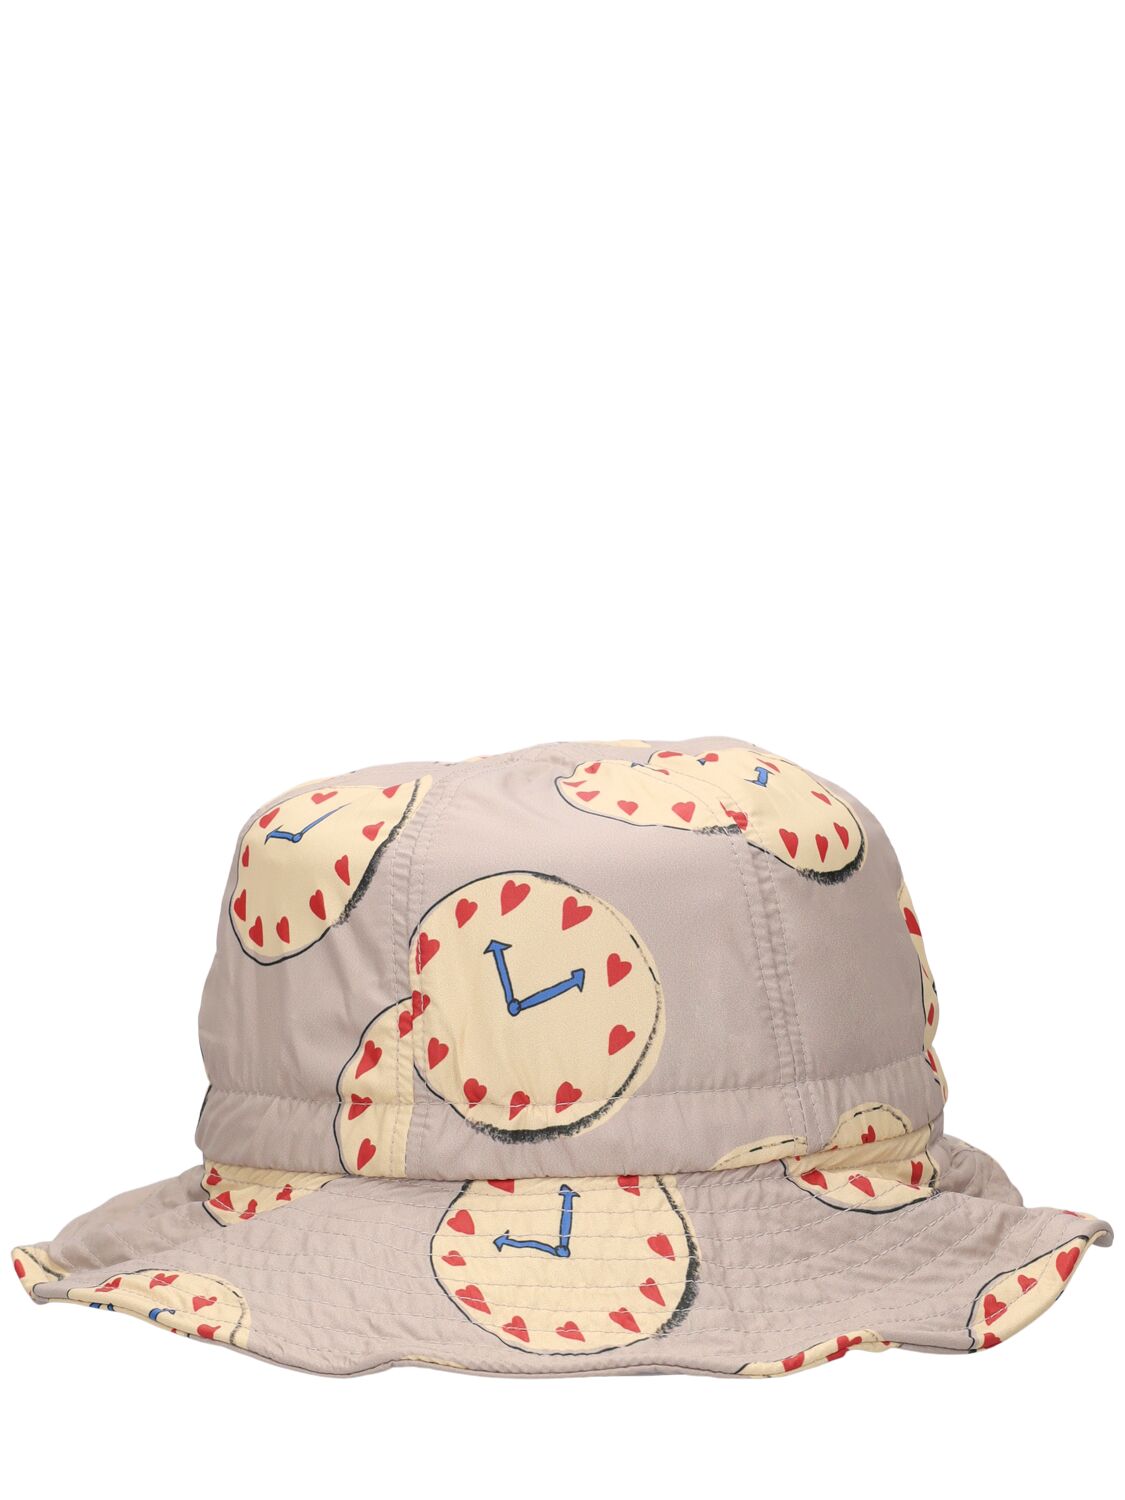 Jellymallow Kids' Clock Printed Cotton Bucket Hat In Grey